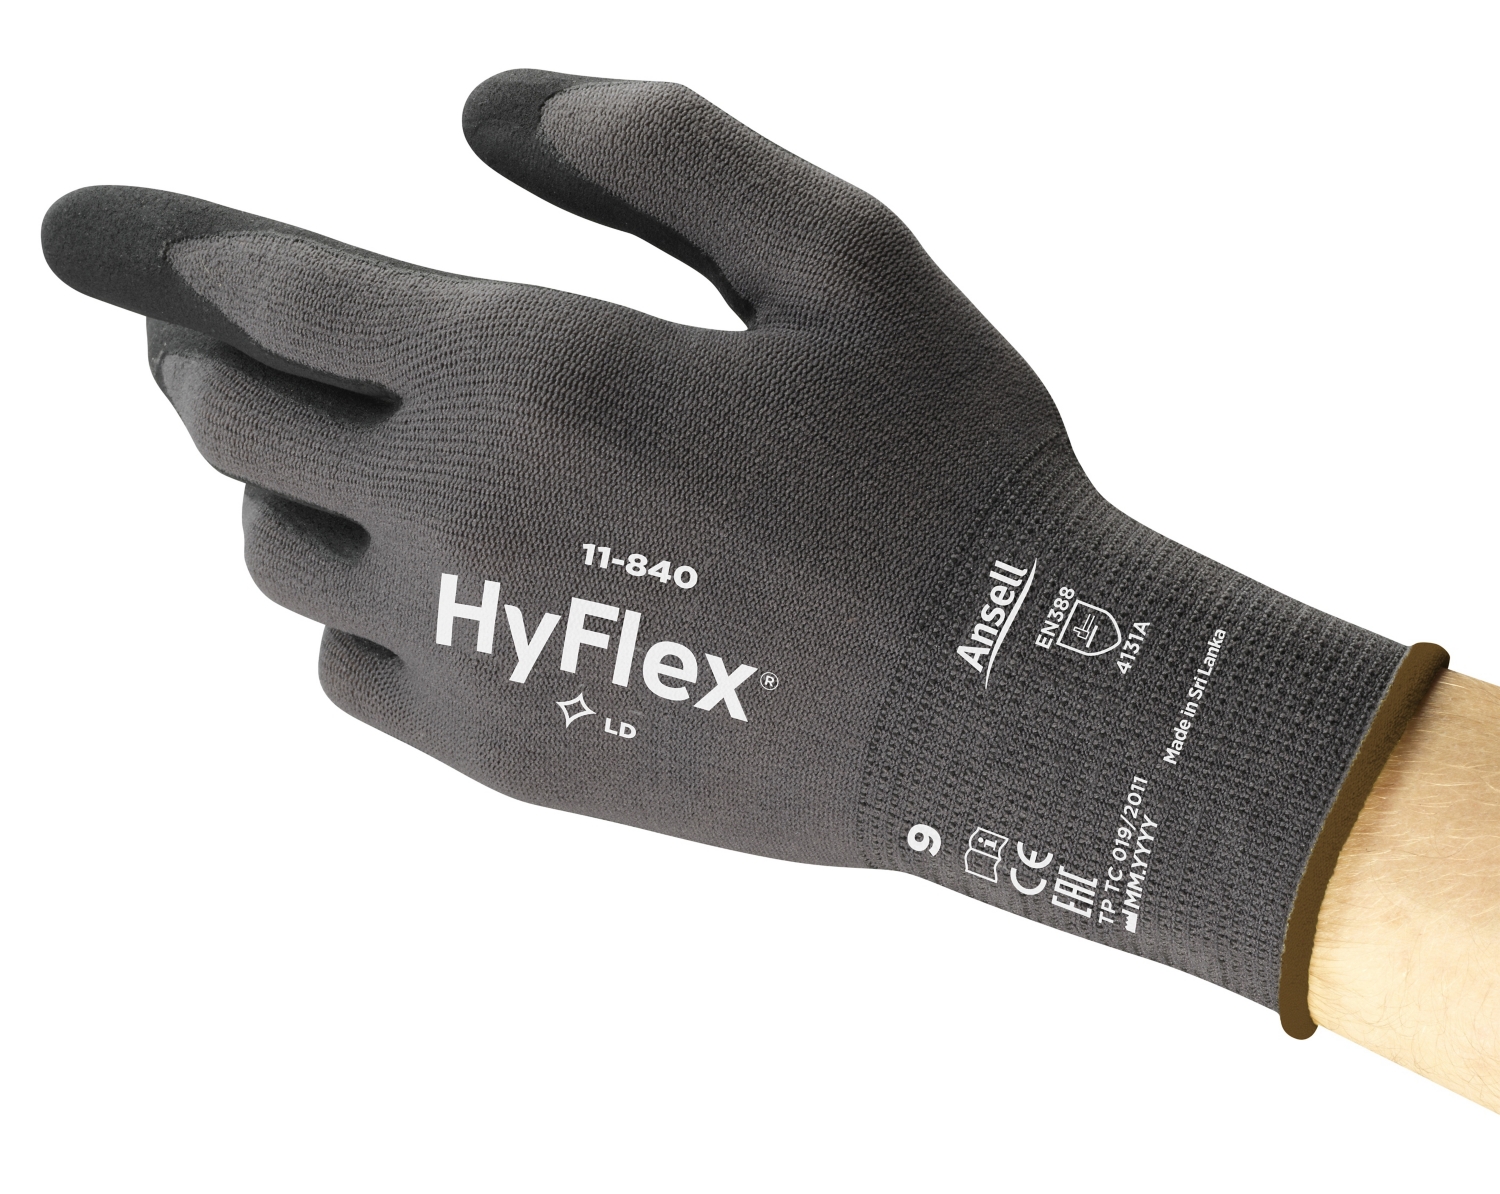 Gants HyFlex 11-840 - Technologie Fortix Ansell